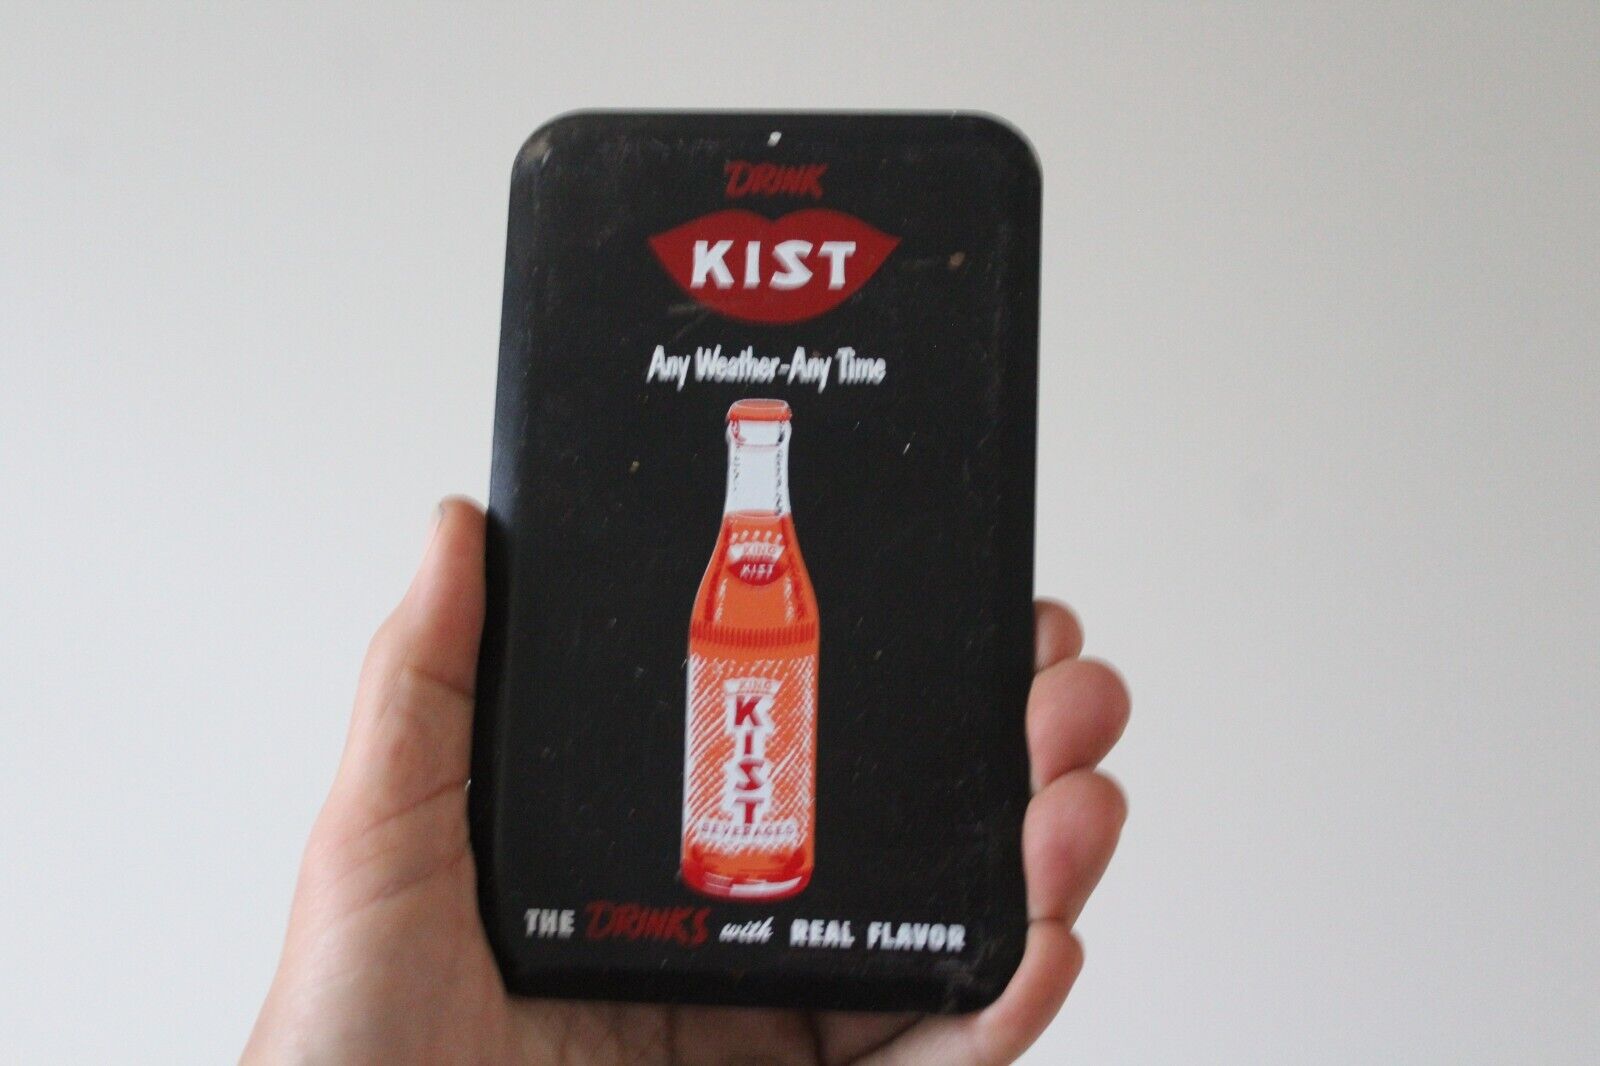 1950s DRINK ORANGE KIST ANYTIME STAMPED PAINTED METAL SIGN CRUSH SODA POP BOTTLE